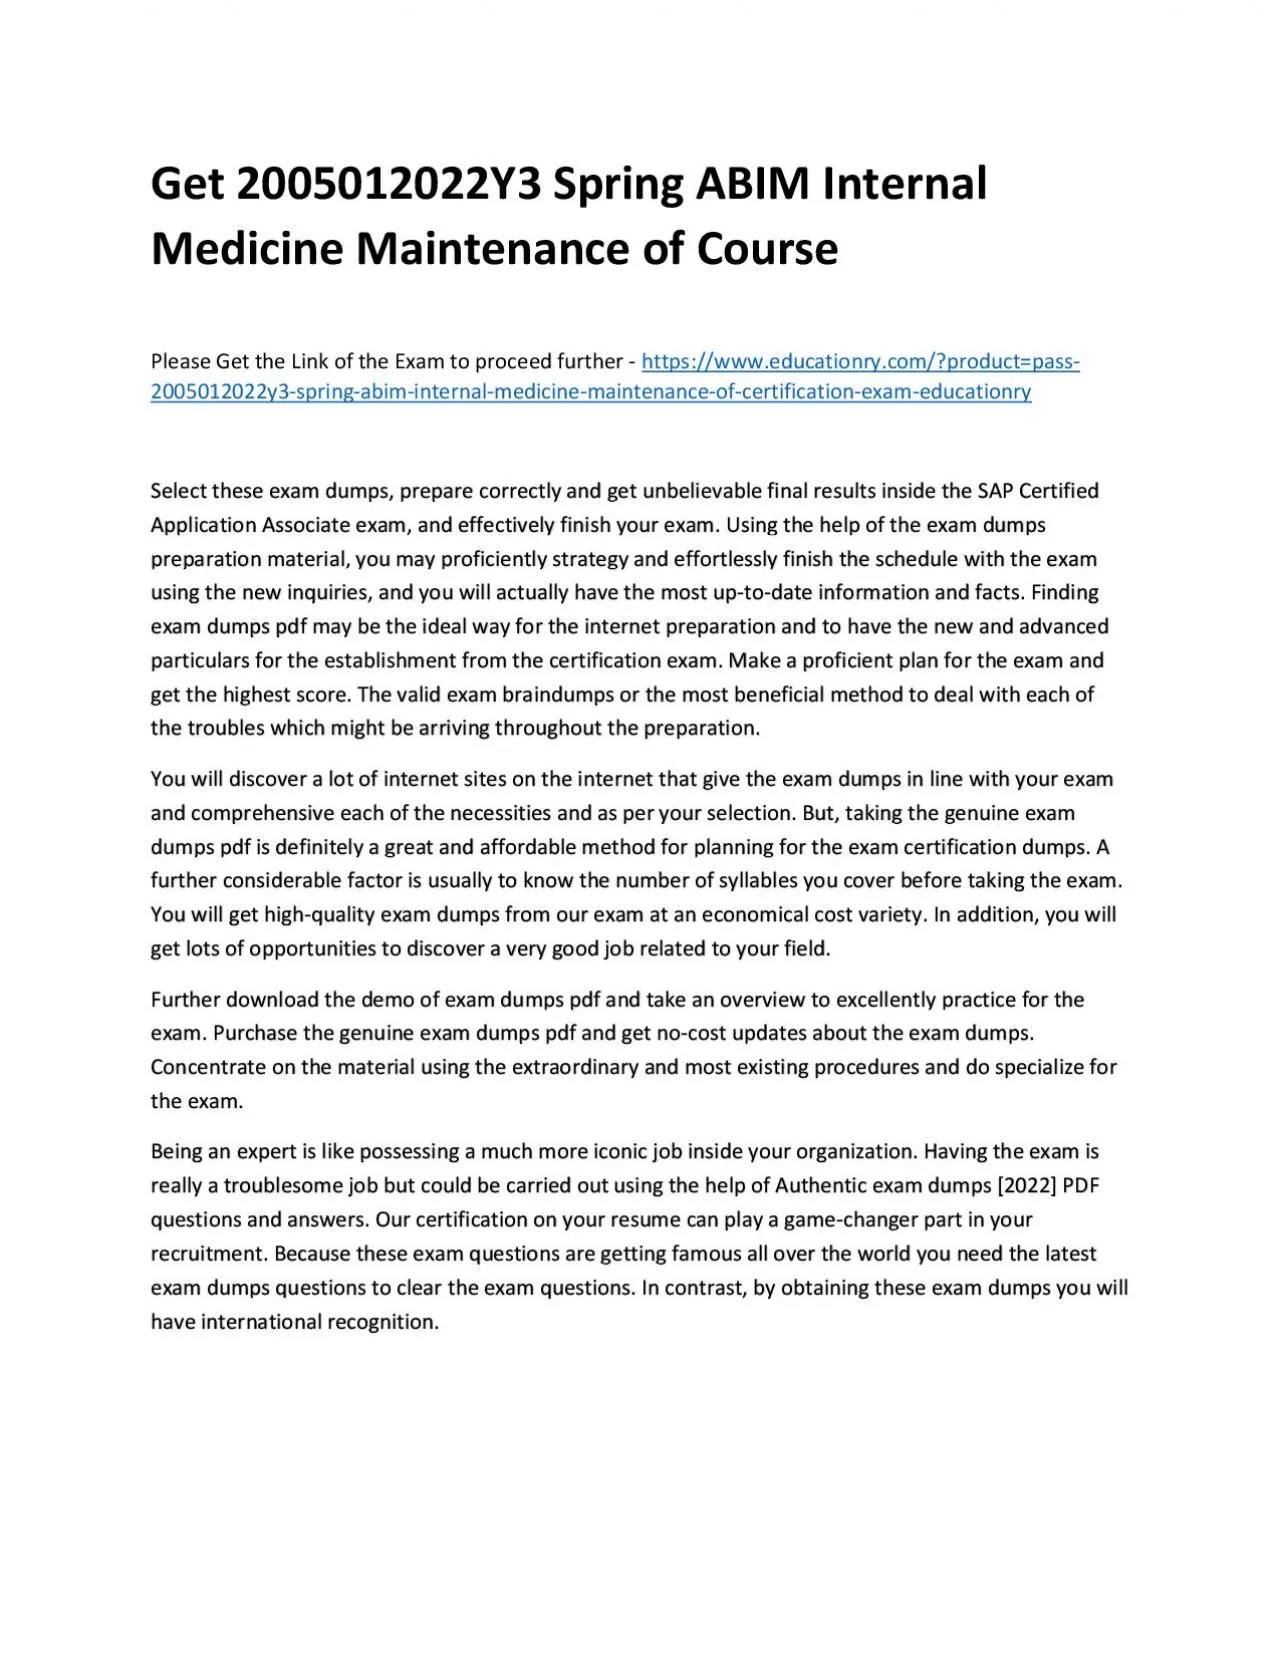 2005012022Y3 Spring ABIM Internal Medicine Maintenance